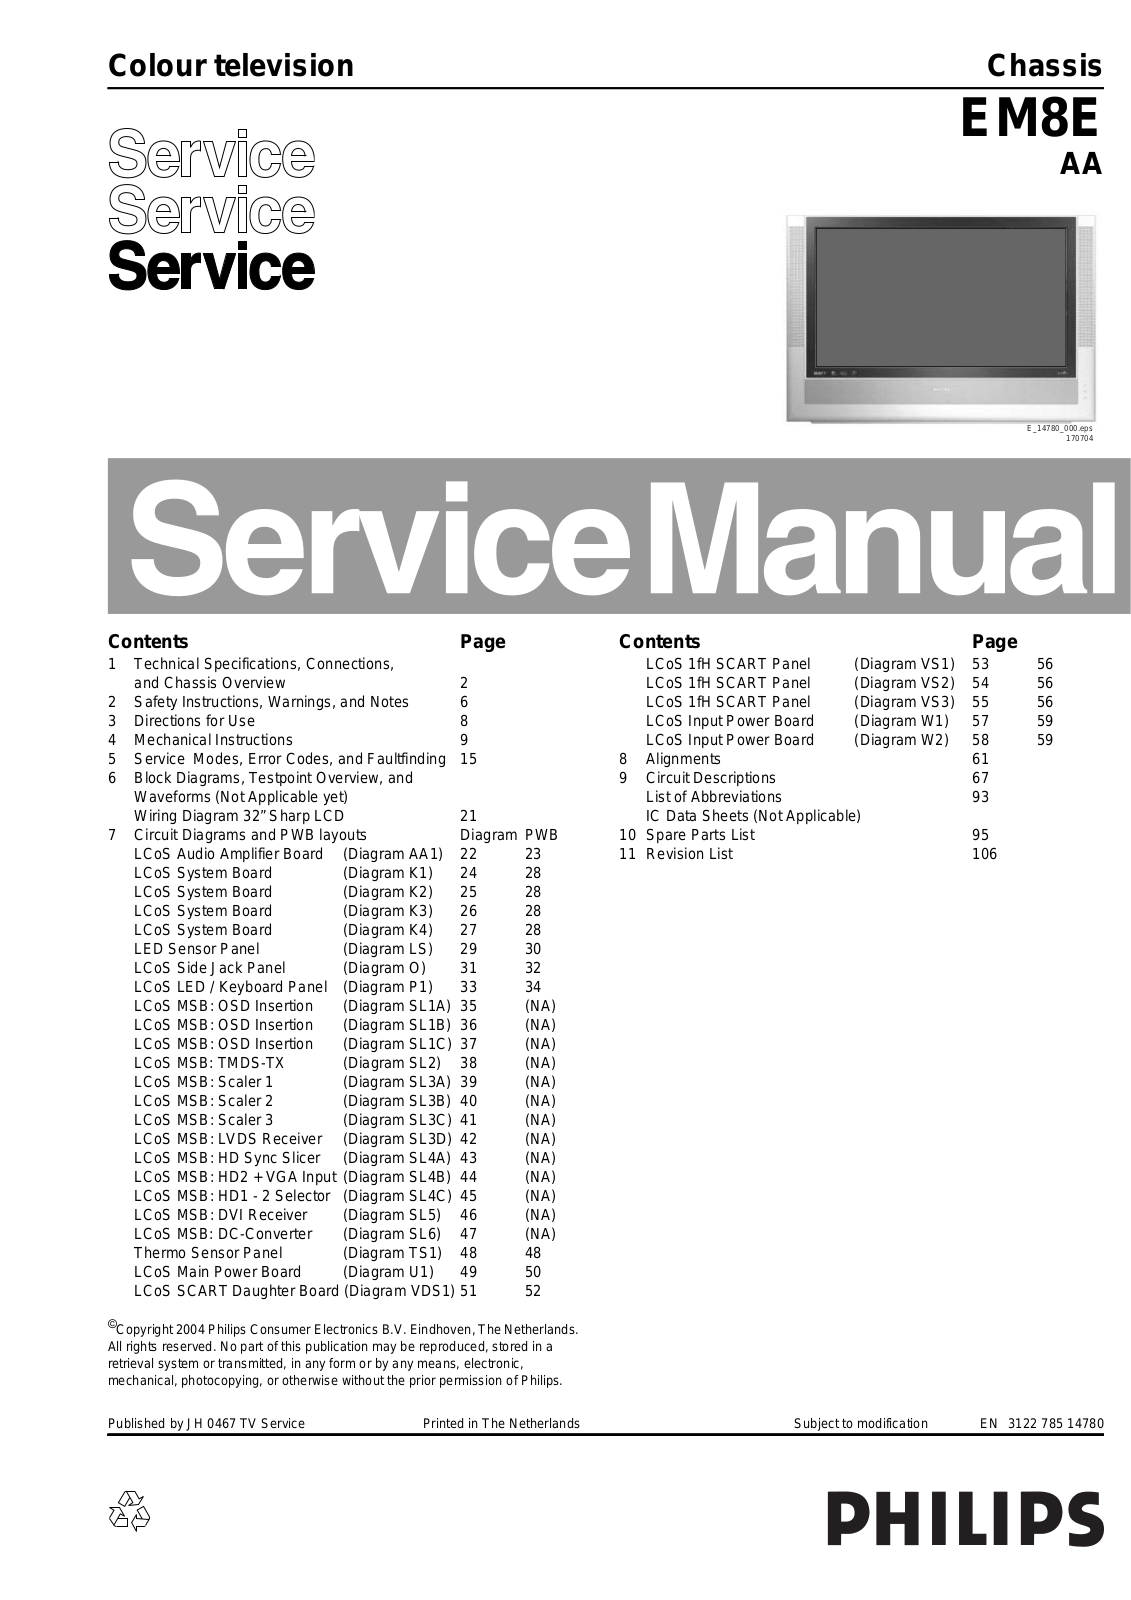 Philips EM8E Service Manual